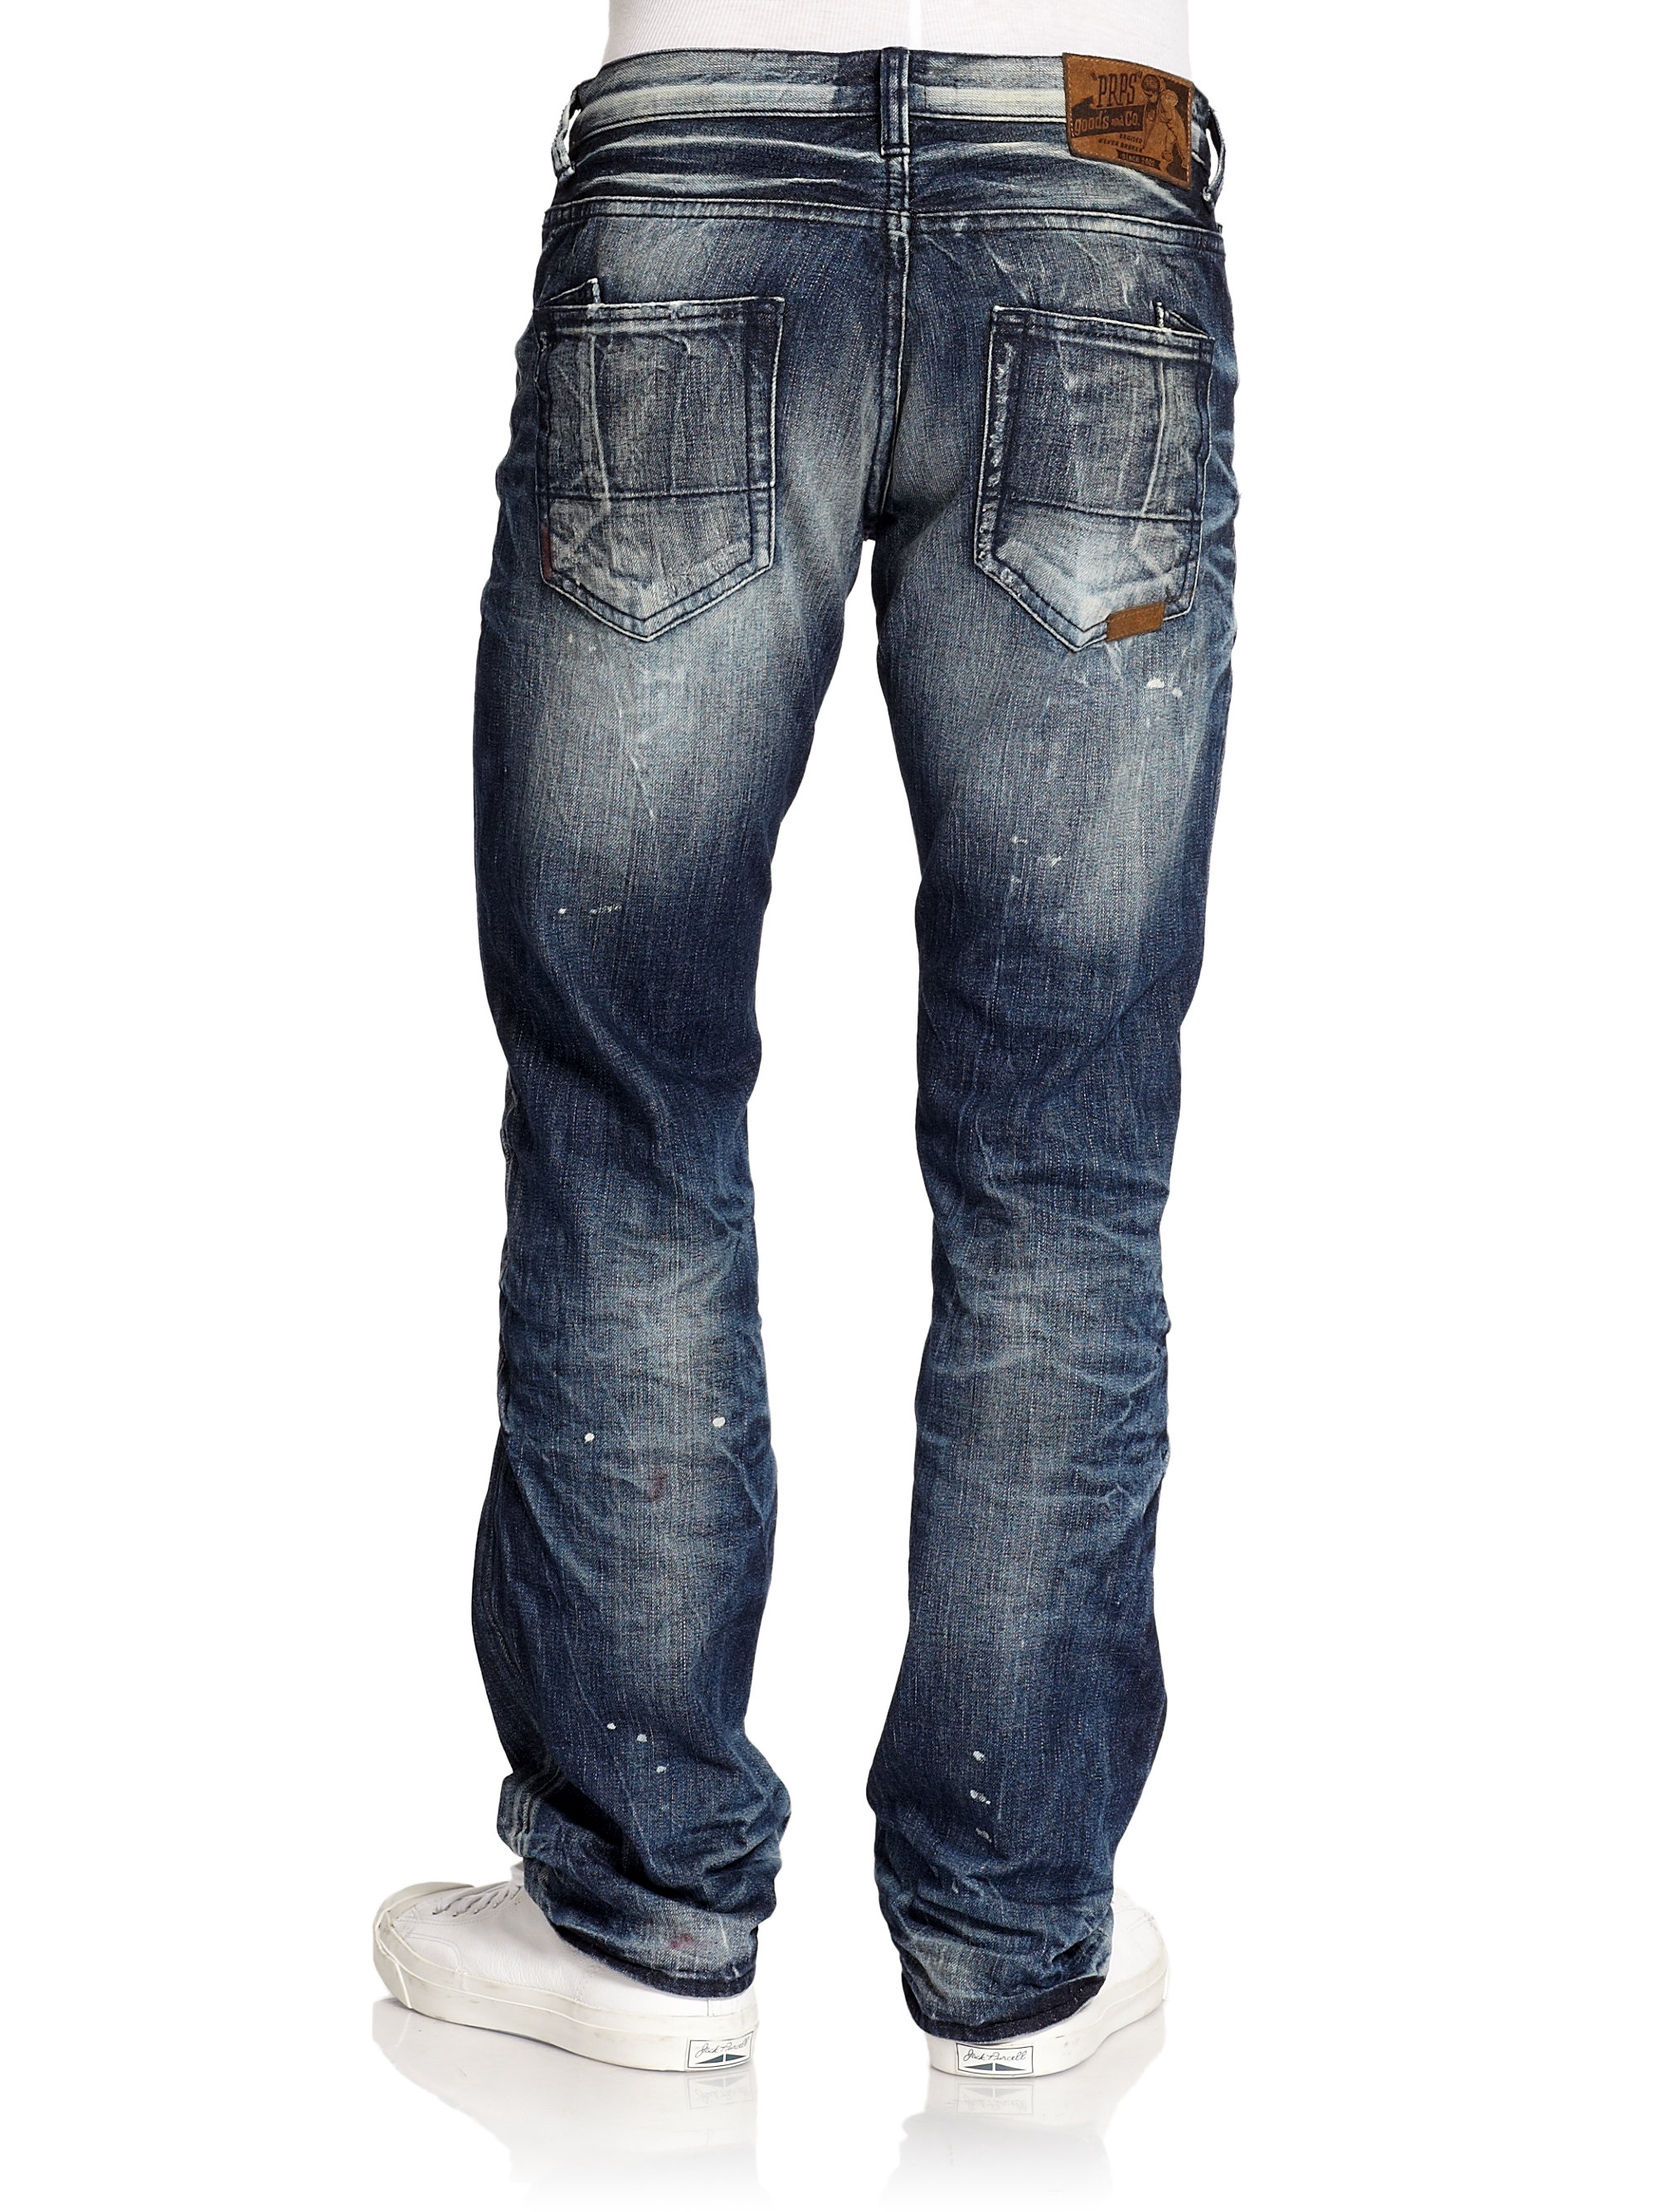 Lyst - Prps Shining Wall Faded Straightleg Jeans in Blue for Men